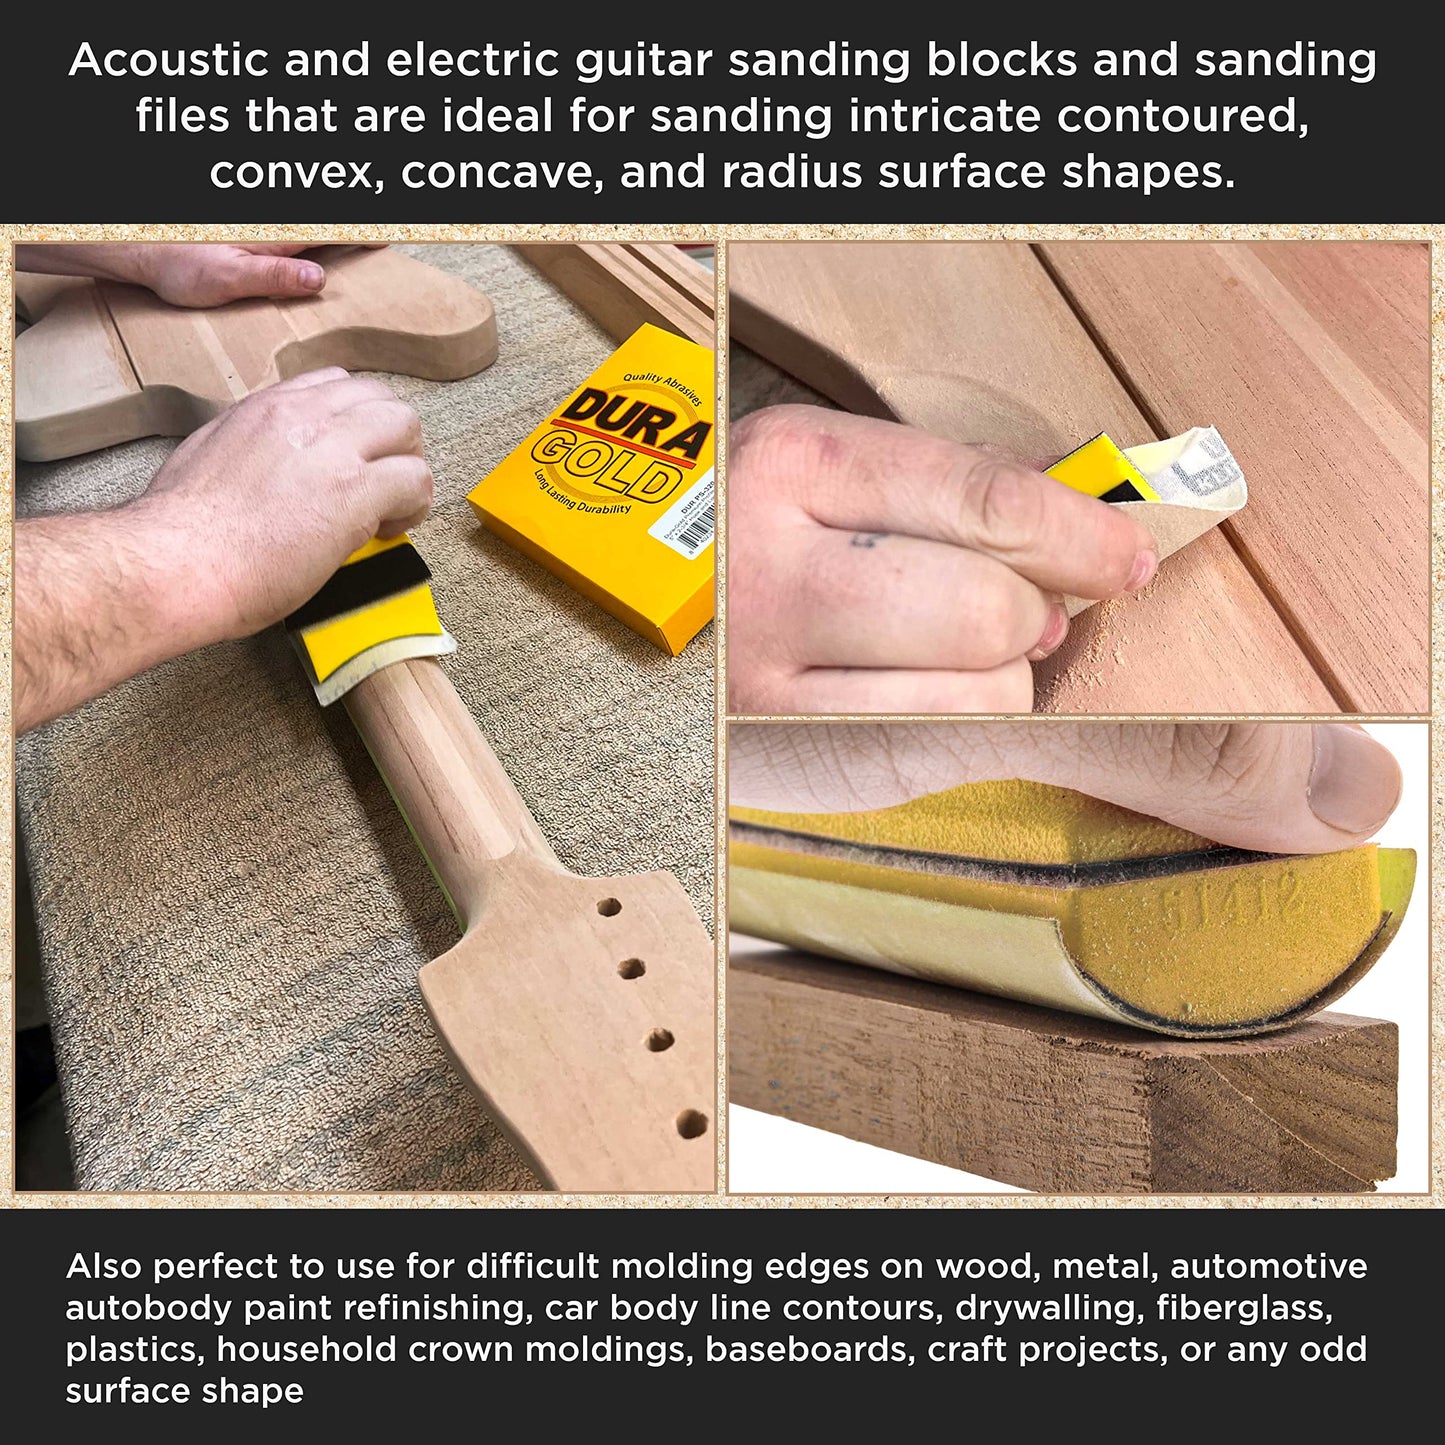 Dura-Gold Luthier Acoustic Guitar Master Woodworker Hand Sanding Block Set with 40 Sheet Hook & Loop Sandpaper Kit - Music Radius Repair Tools,